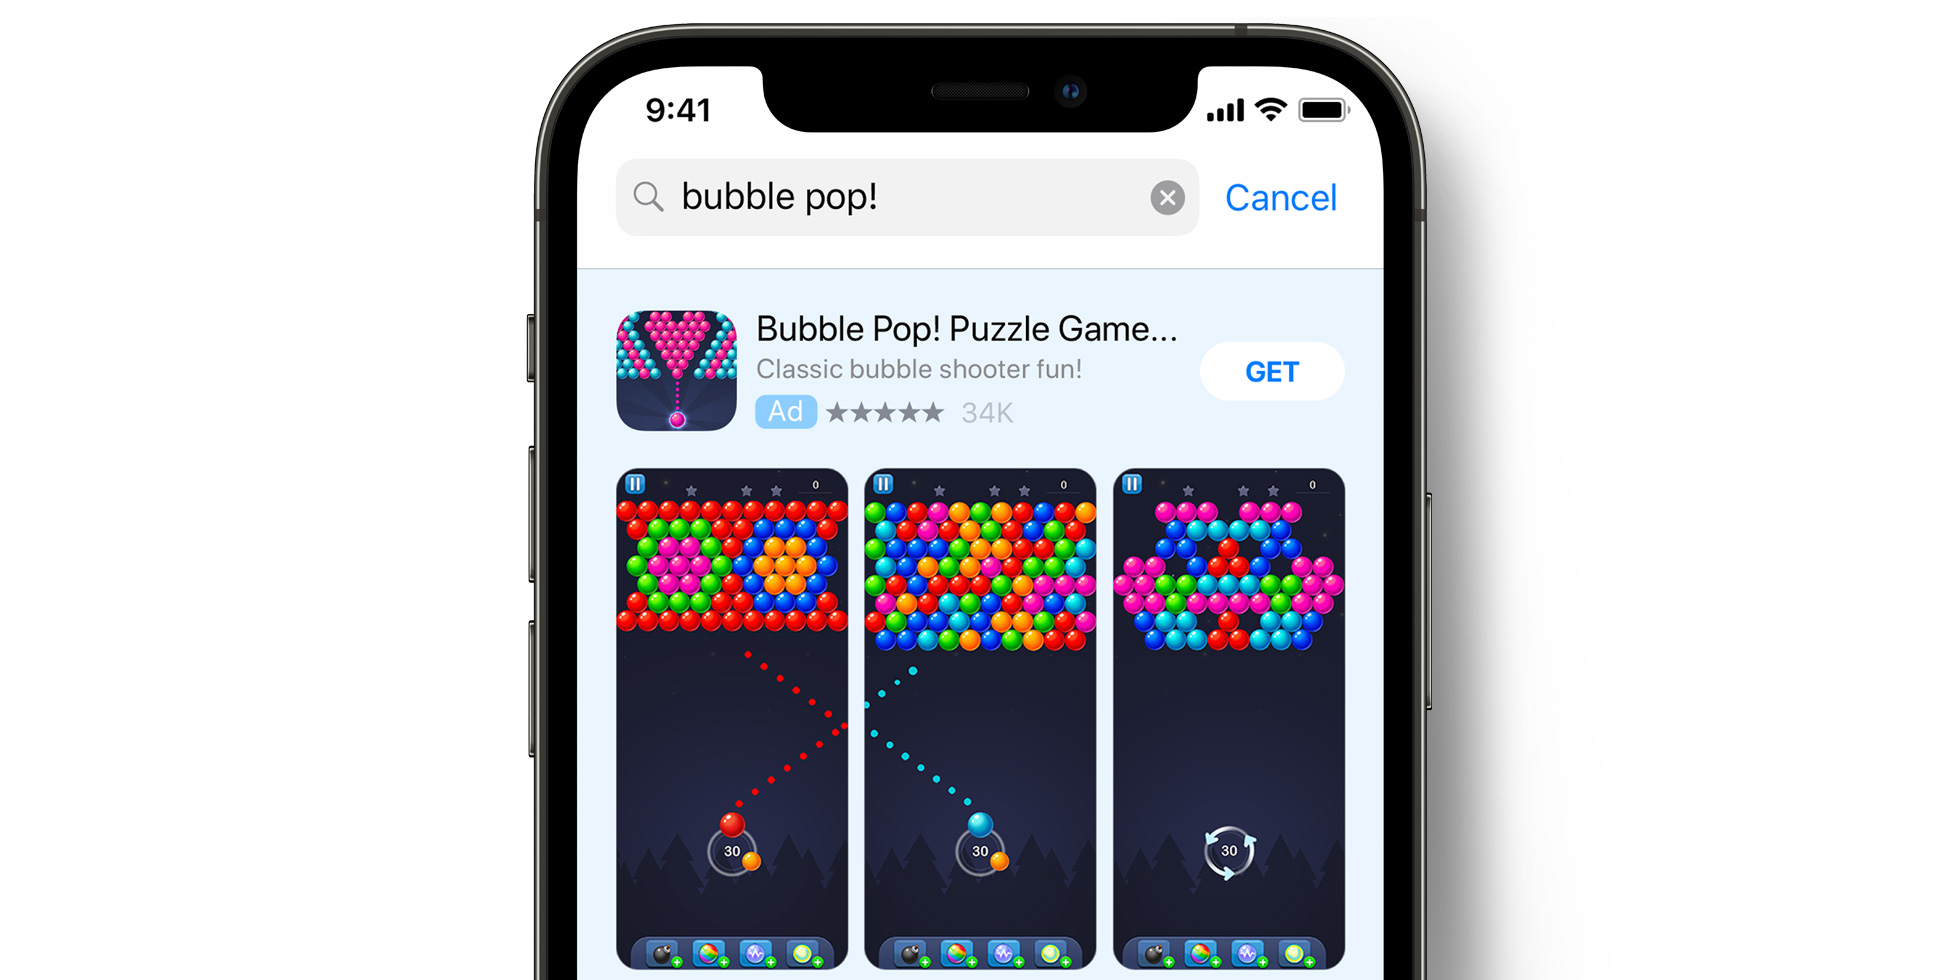 Bubble Pop! Anzeige im App Store